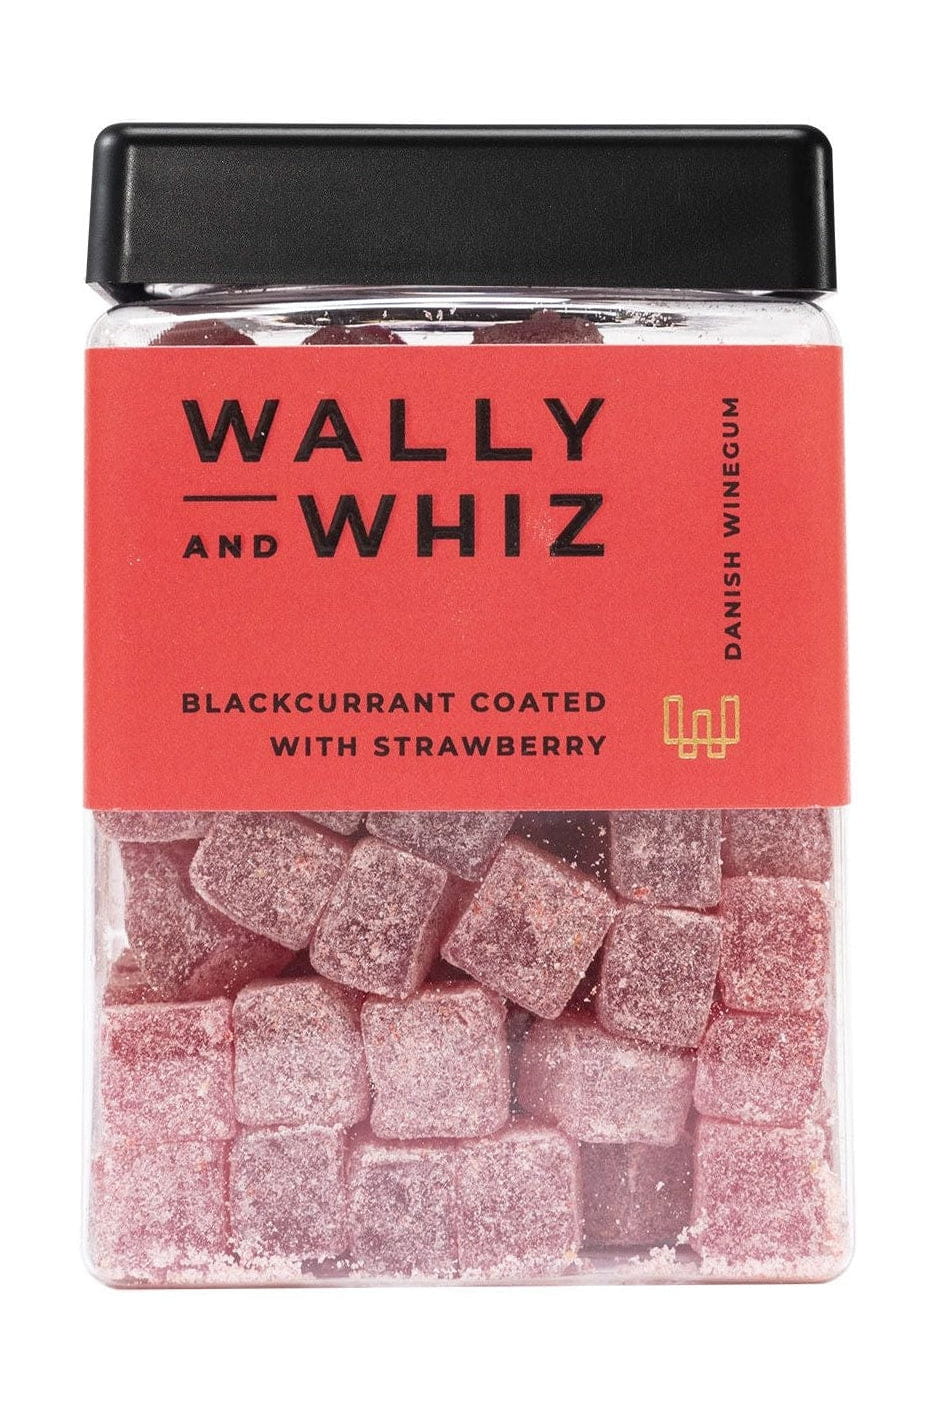 Wally And Whiz Vin gummi terning, sortcurrant med jordbær, 240 g